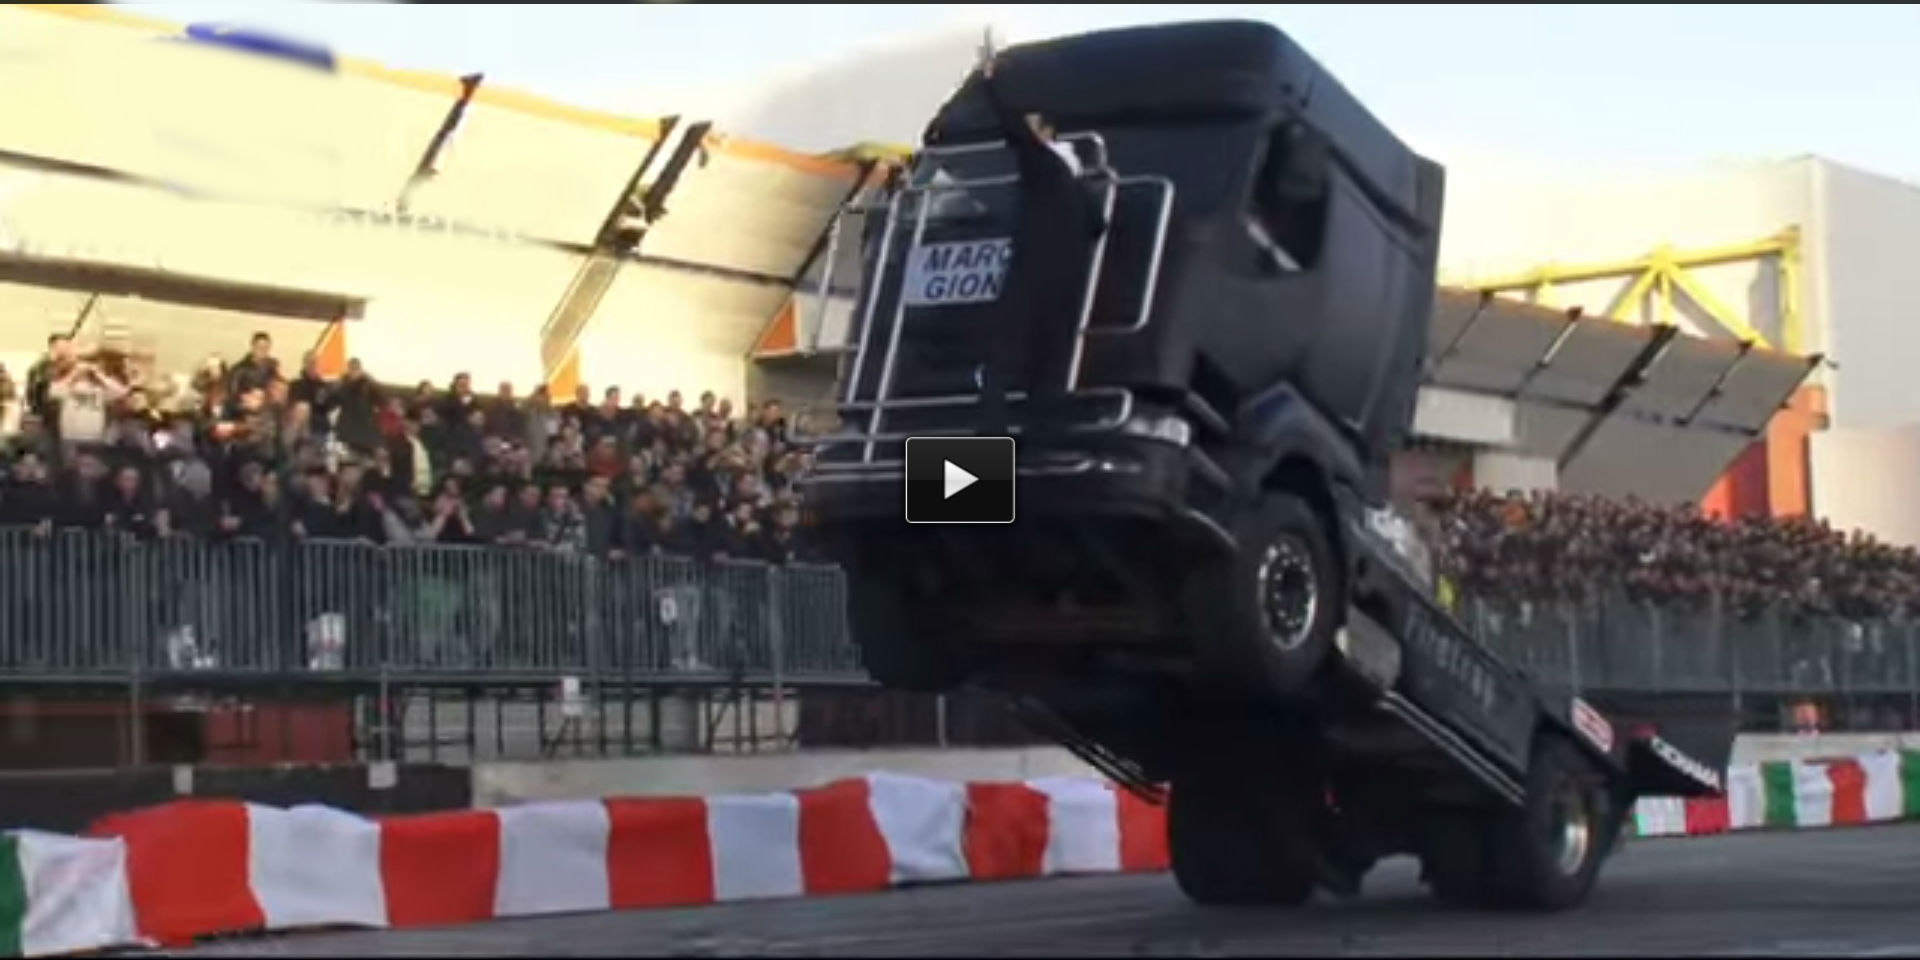 Crazy Truck stuntman show